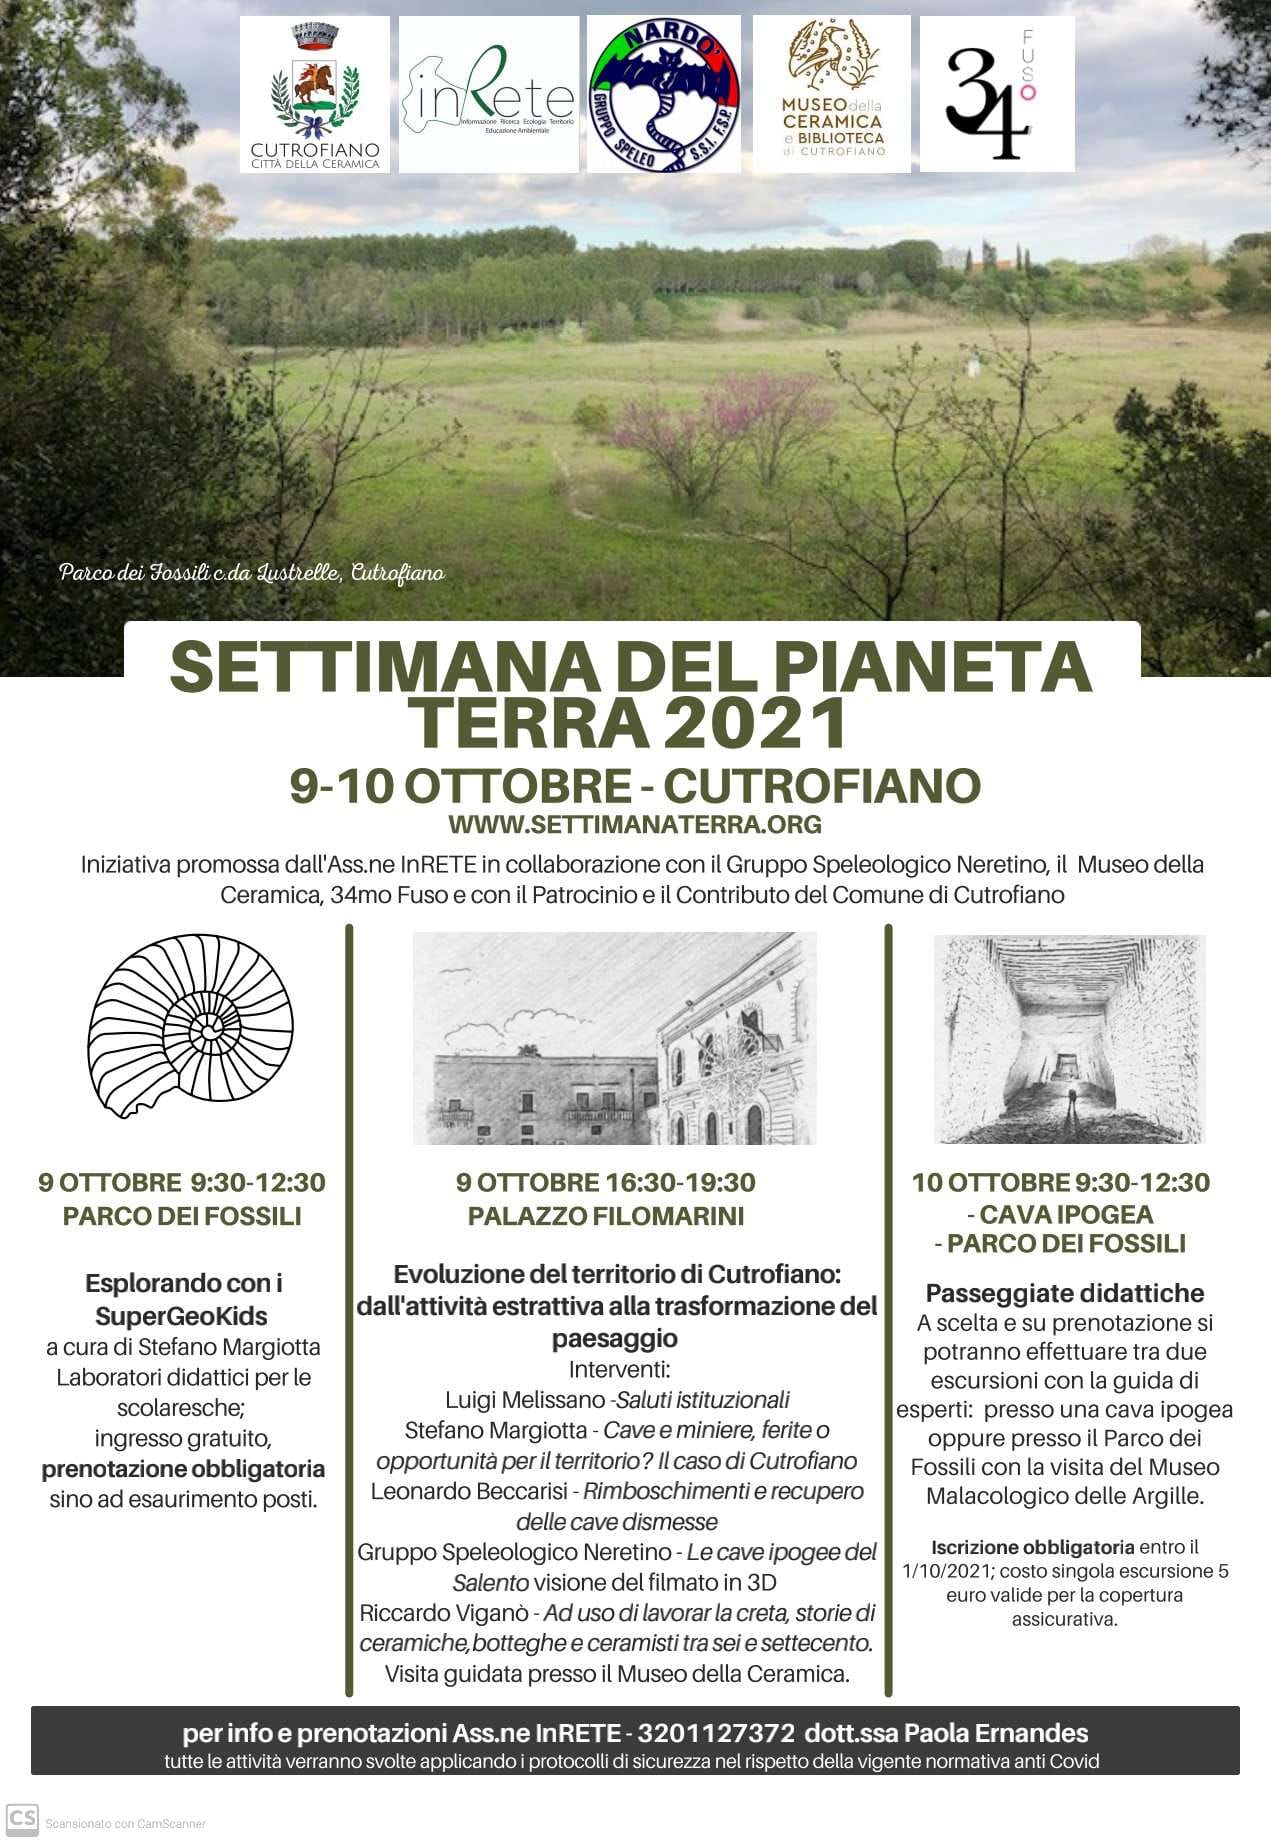 09-10 OTTOBRE - SETTIMANA DEL PIANETA TERRA 2021